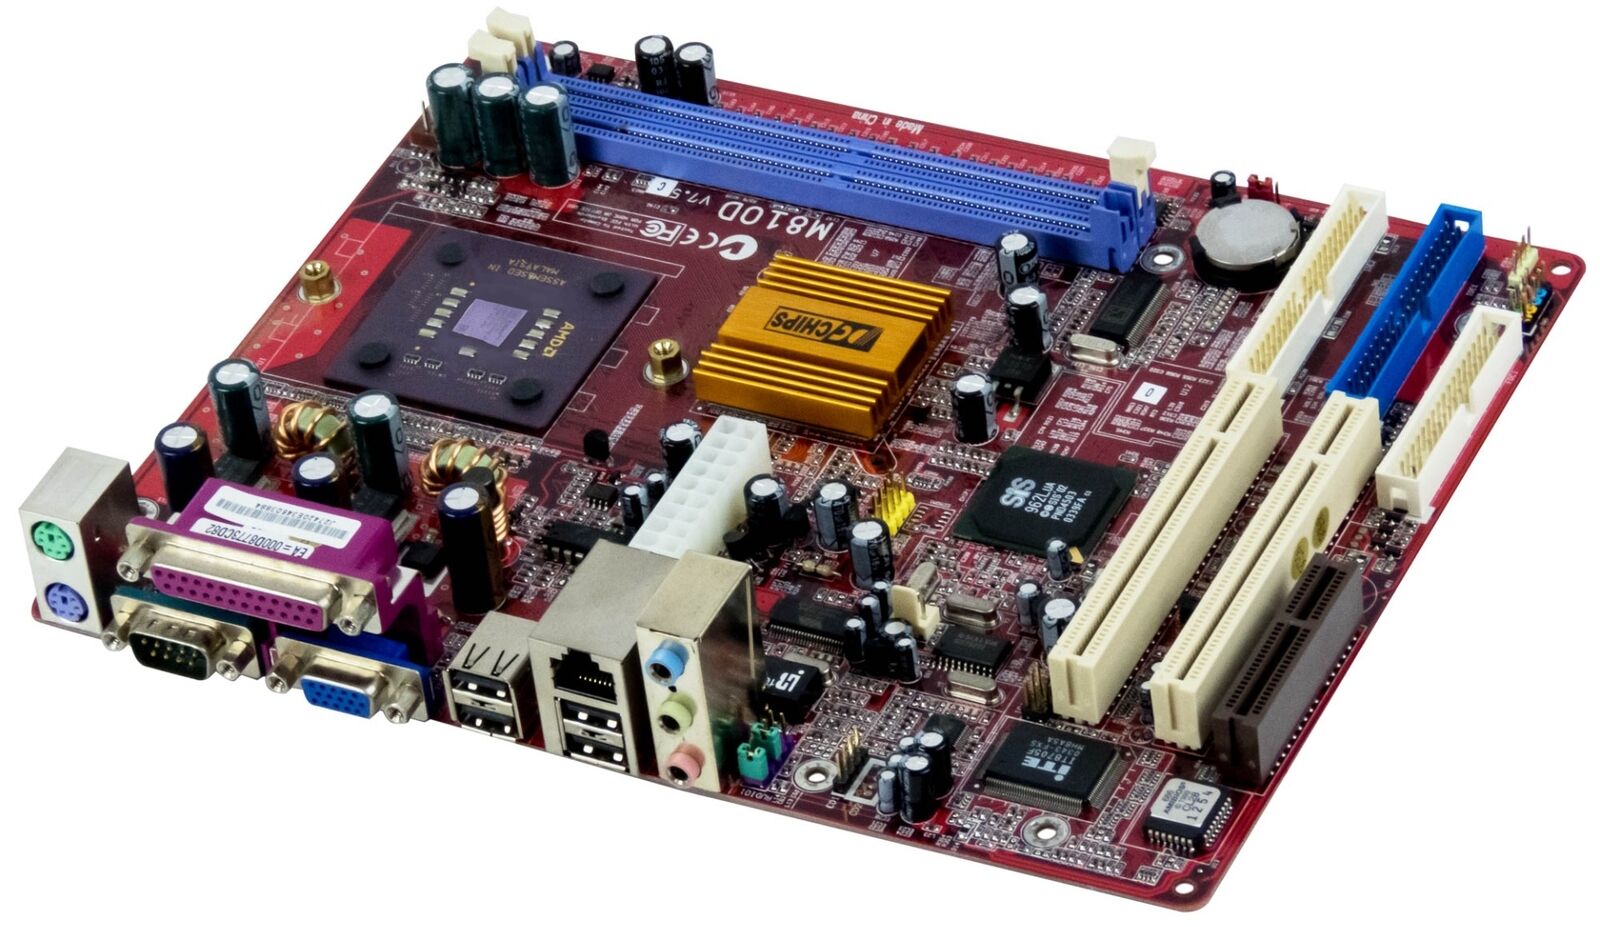 PC Chips M810D V7.5 AMD 2000+ 2x DDR 2x PCI Matx Motherboard